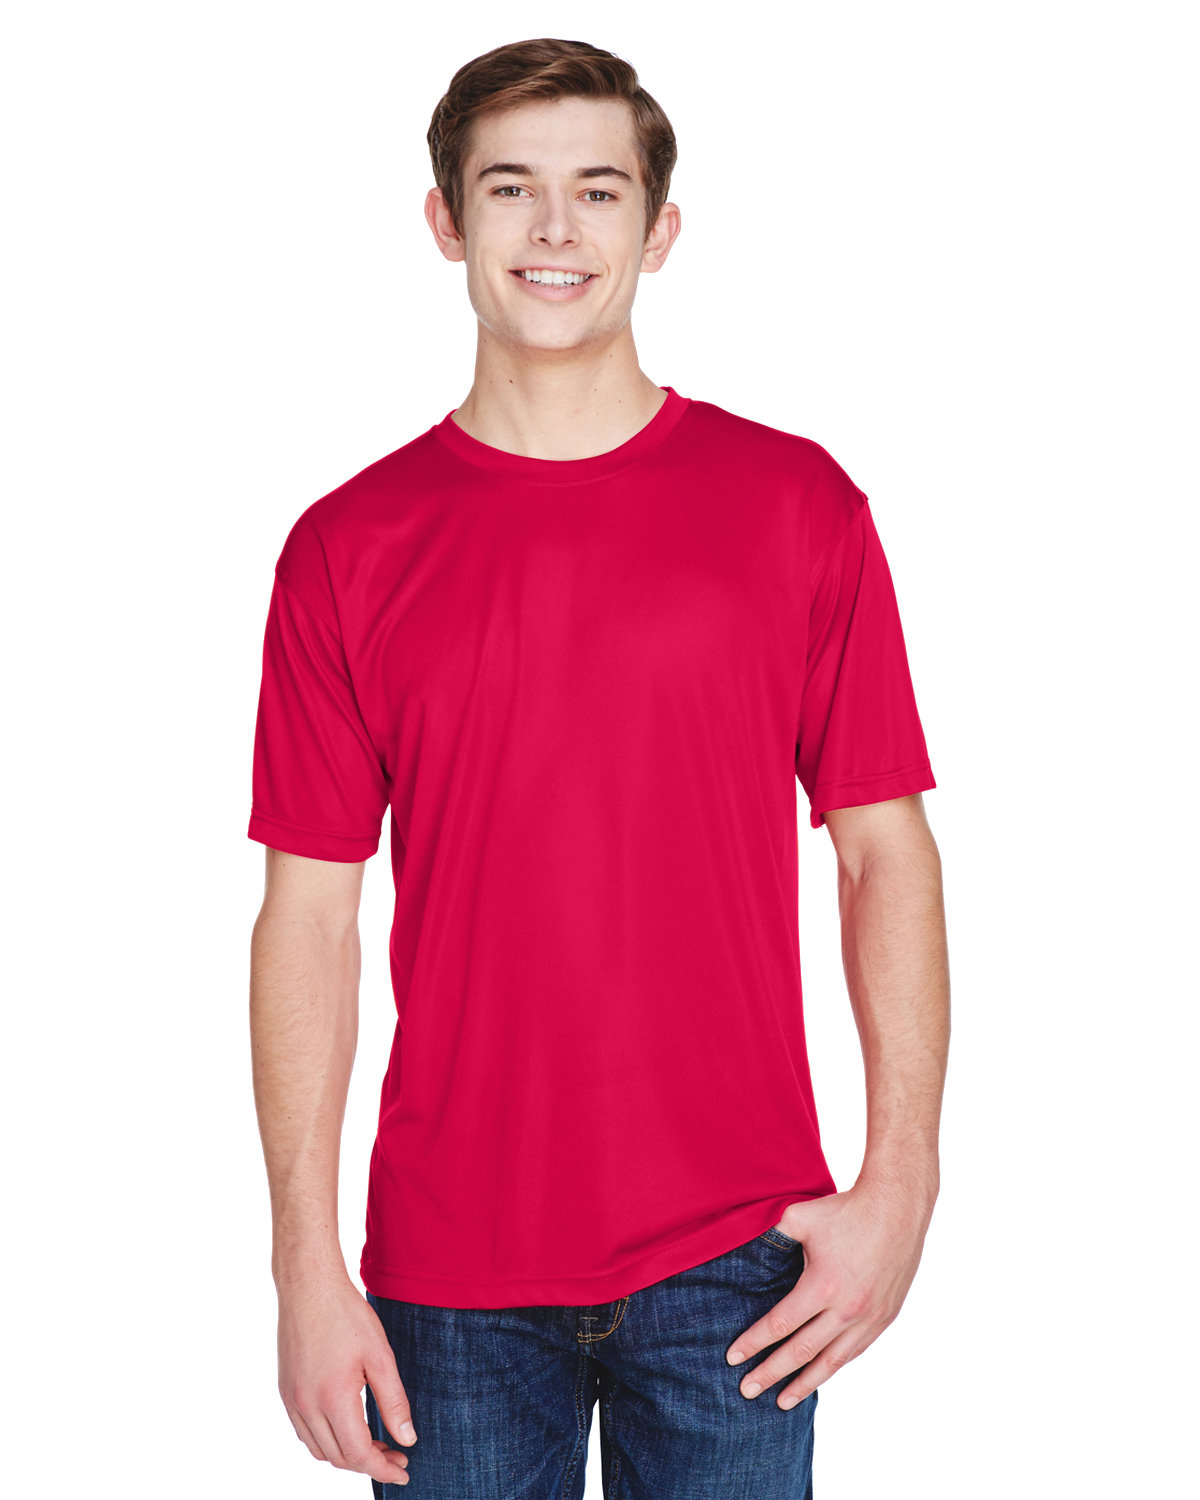 UltraClub Men's Cool & Dry Basic Performance T-Shirt RED 